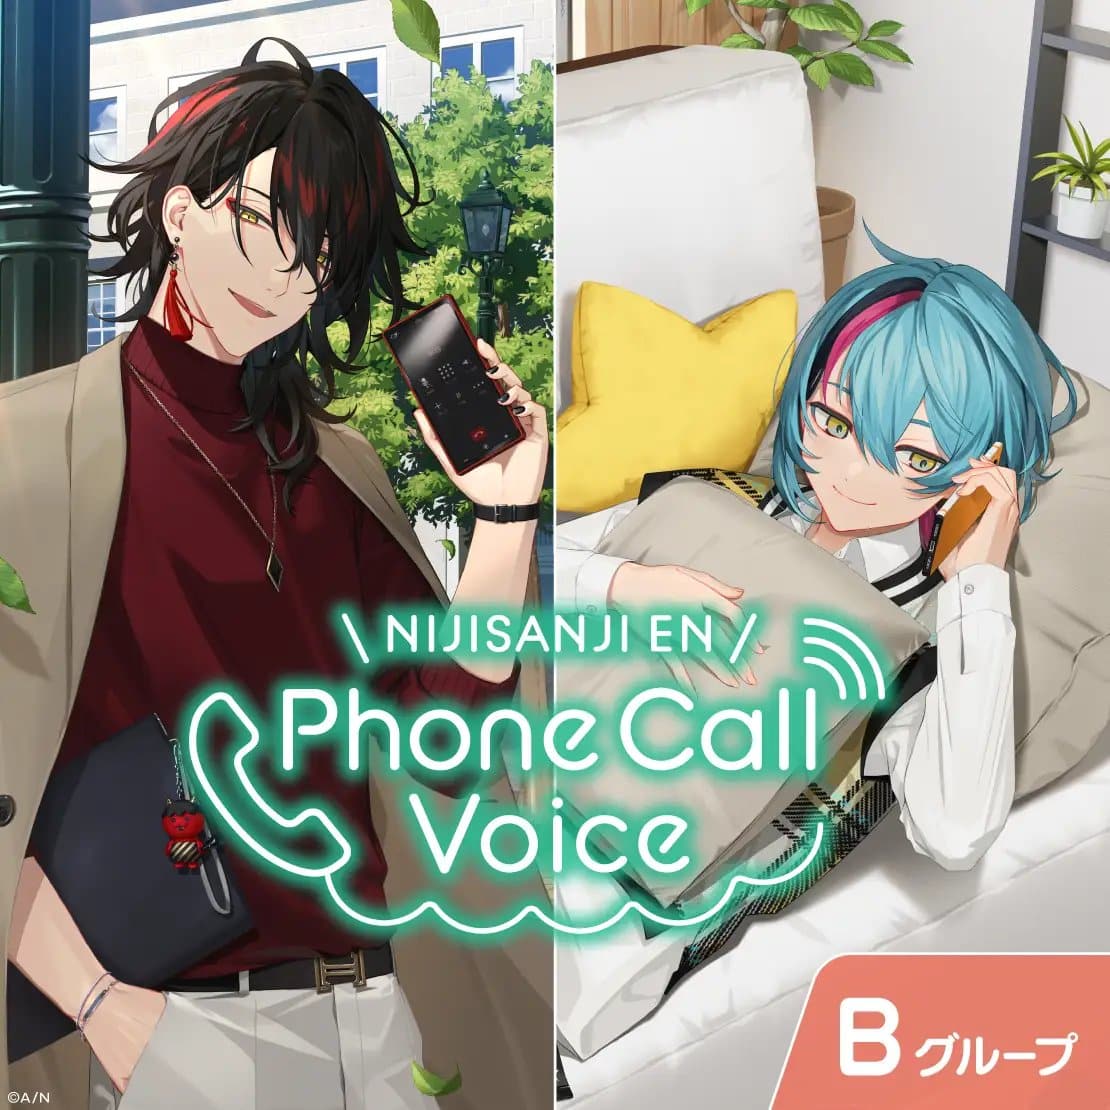 Nijisanji En Phone Call Voice